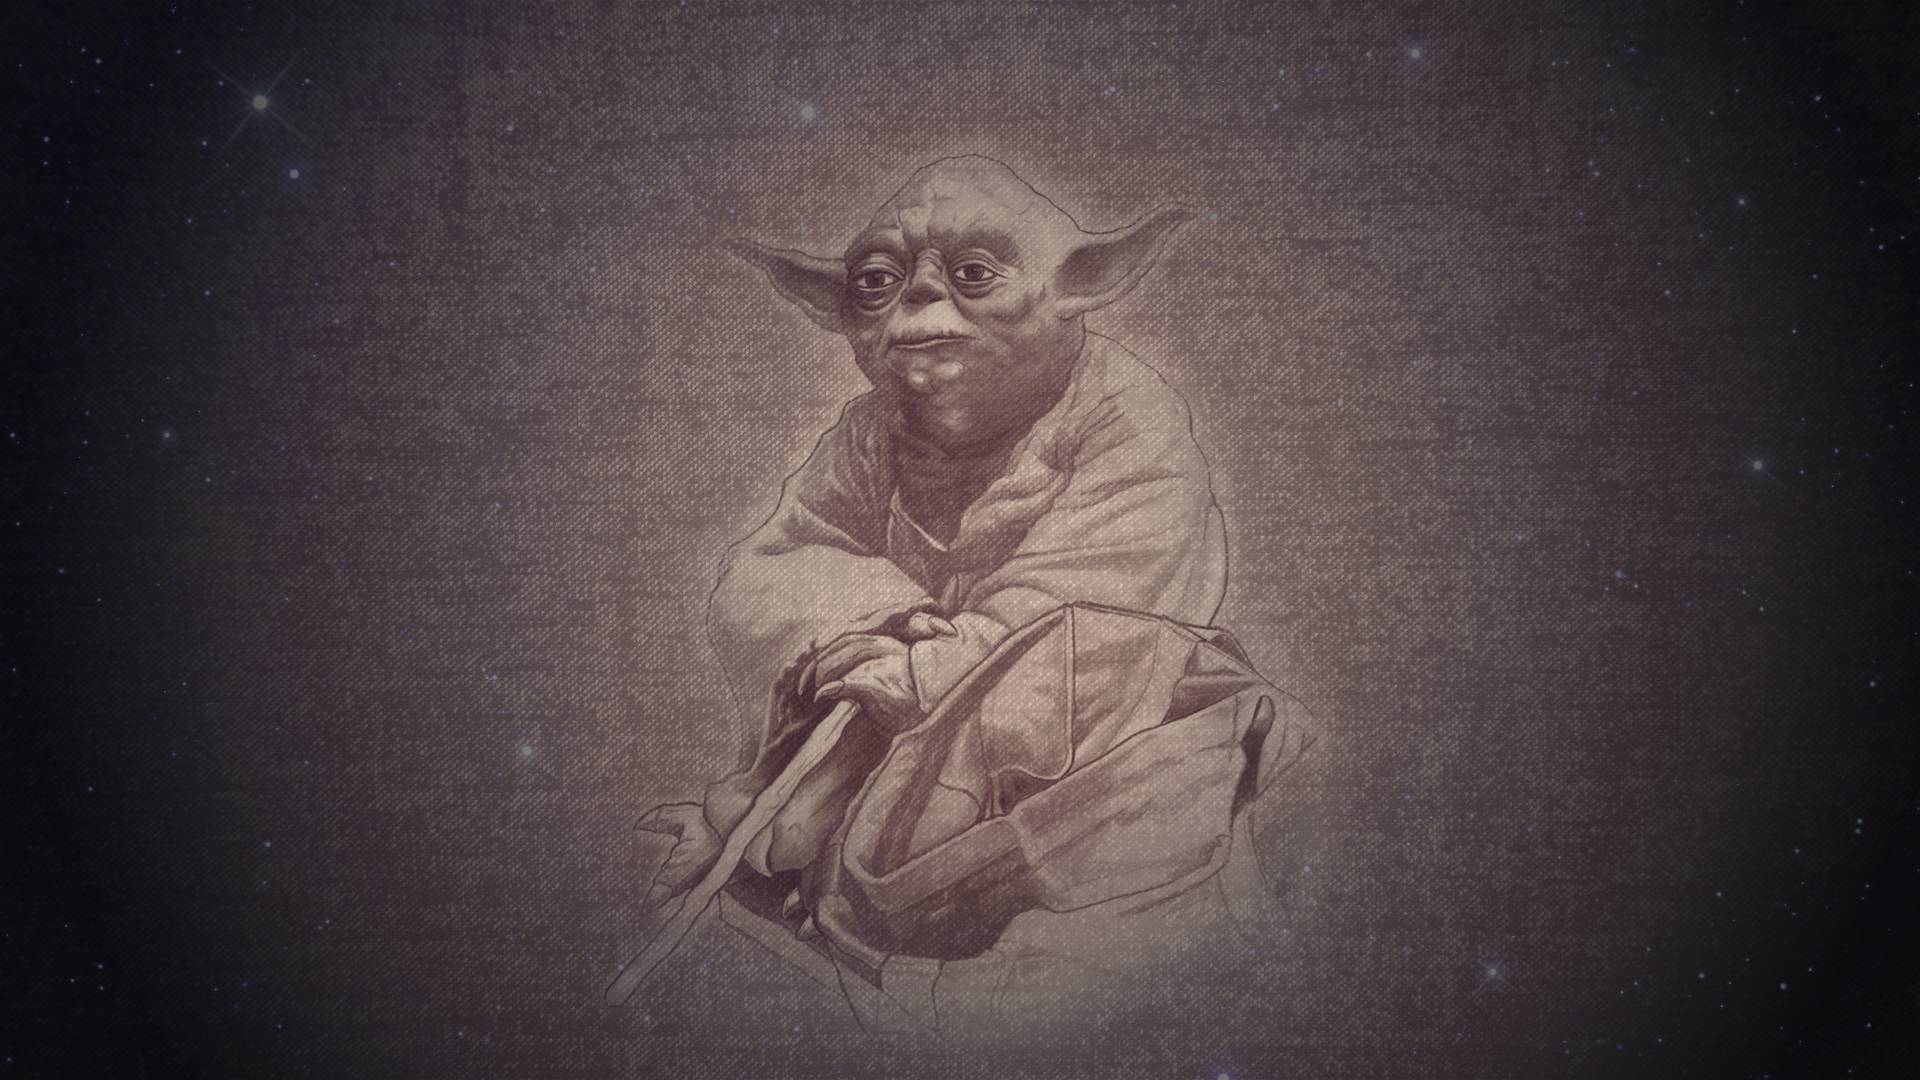 Star Wars Artwork Yoda High Quality And Resolution 237852 19201080